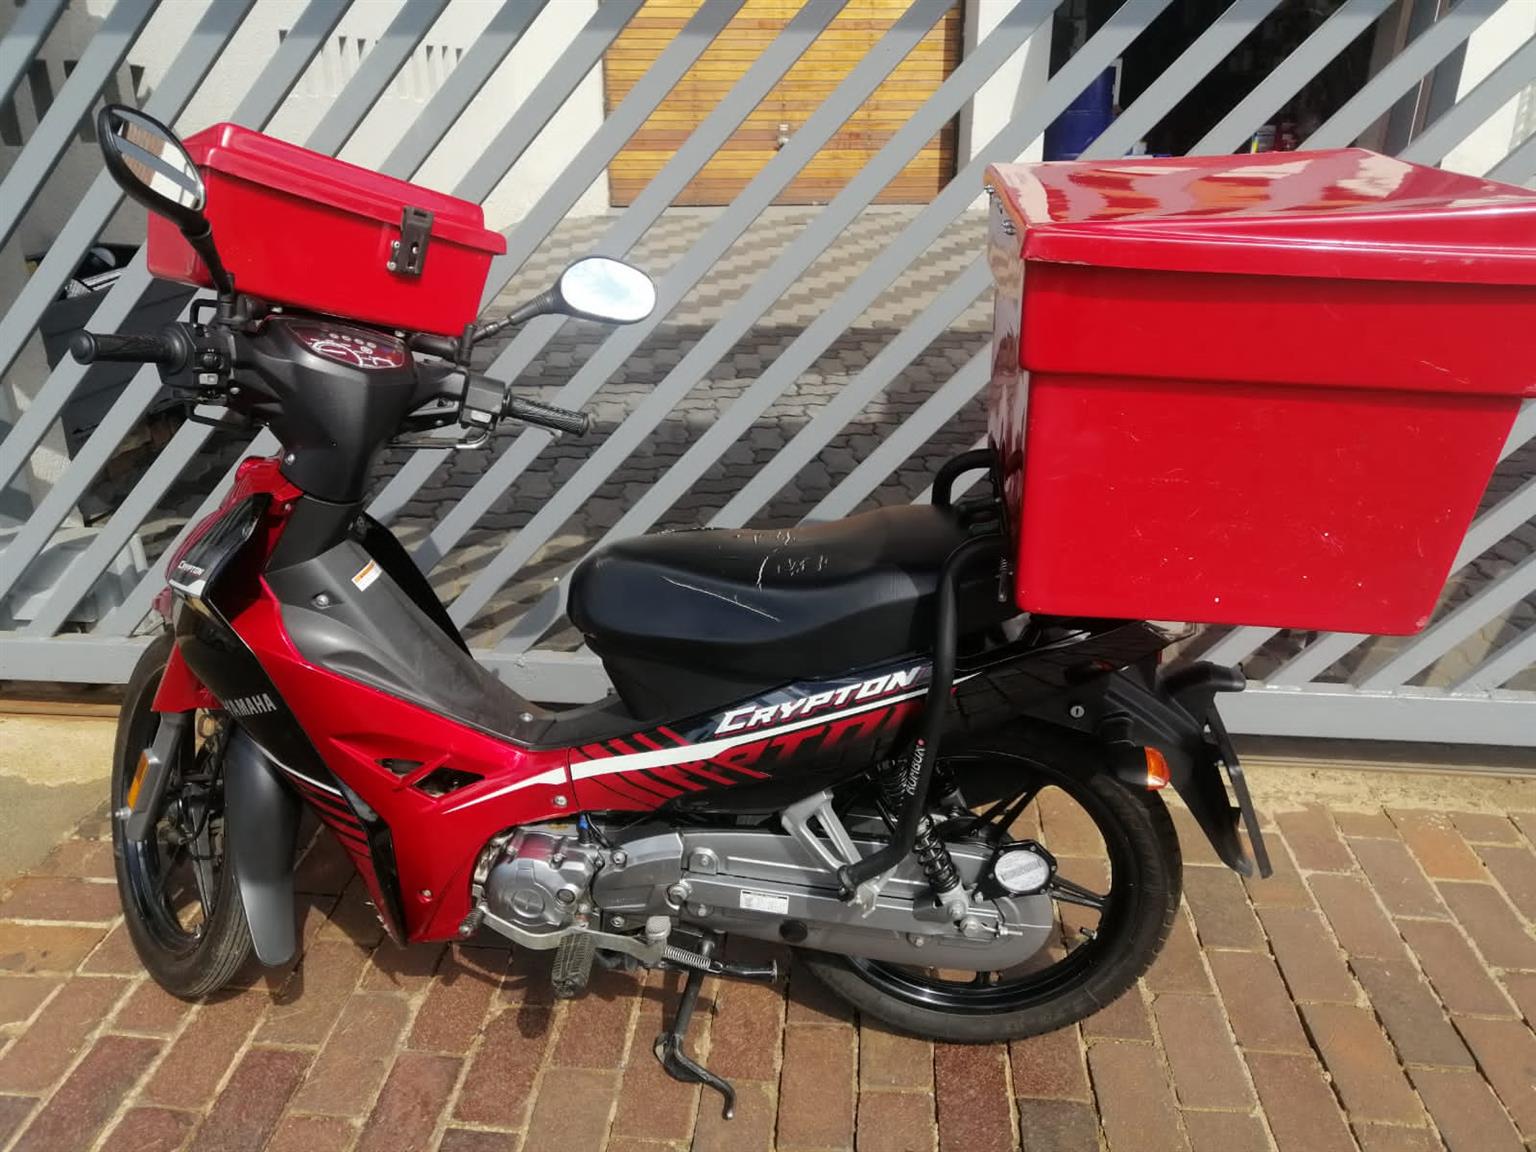 2019 Yamaha Crypton delivery bike 